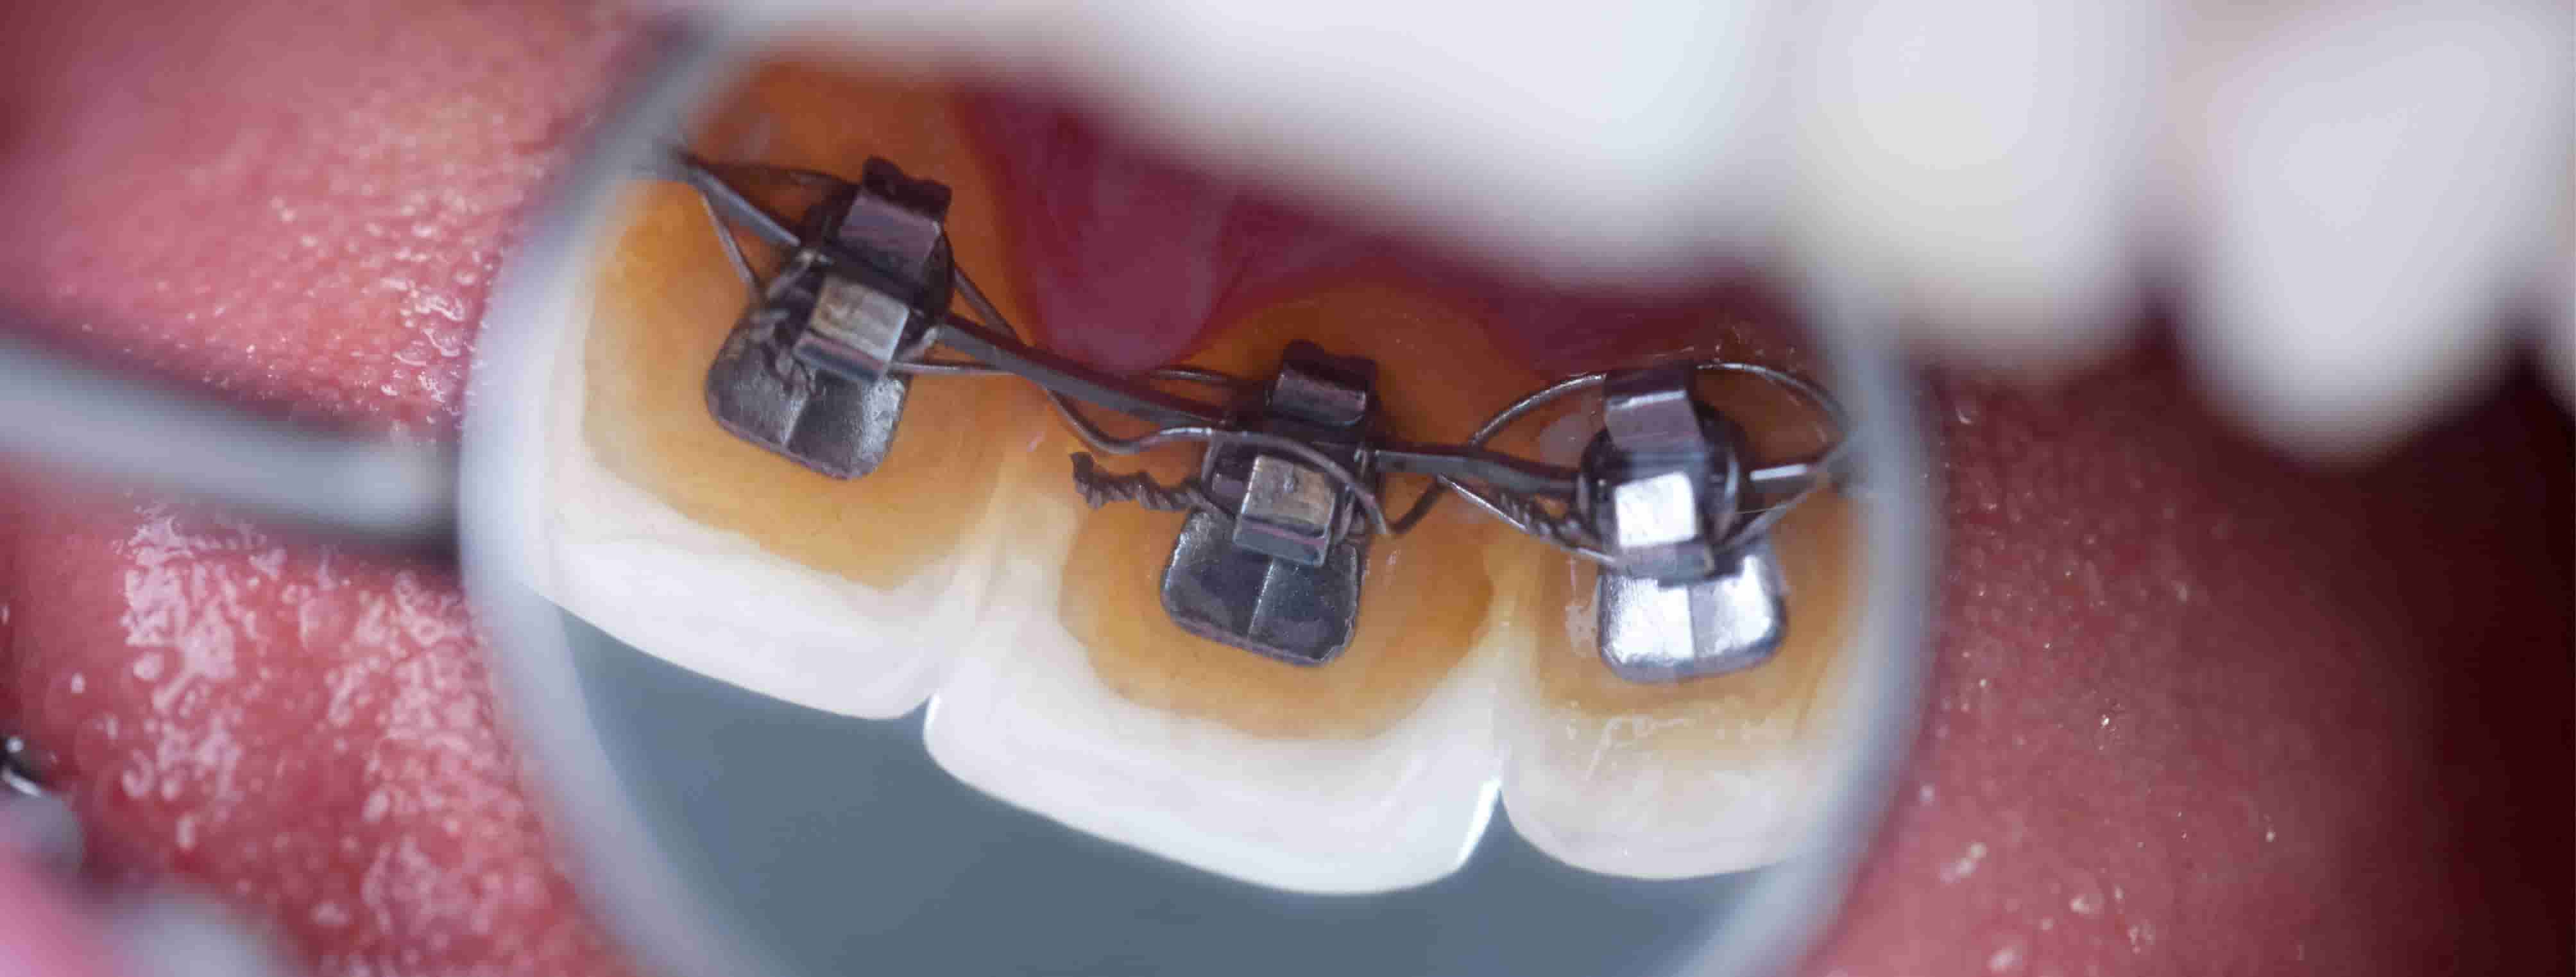 teeth with lingual braces